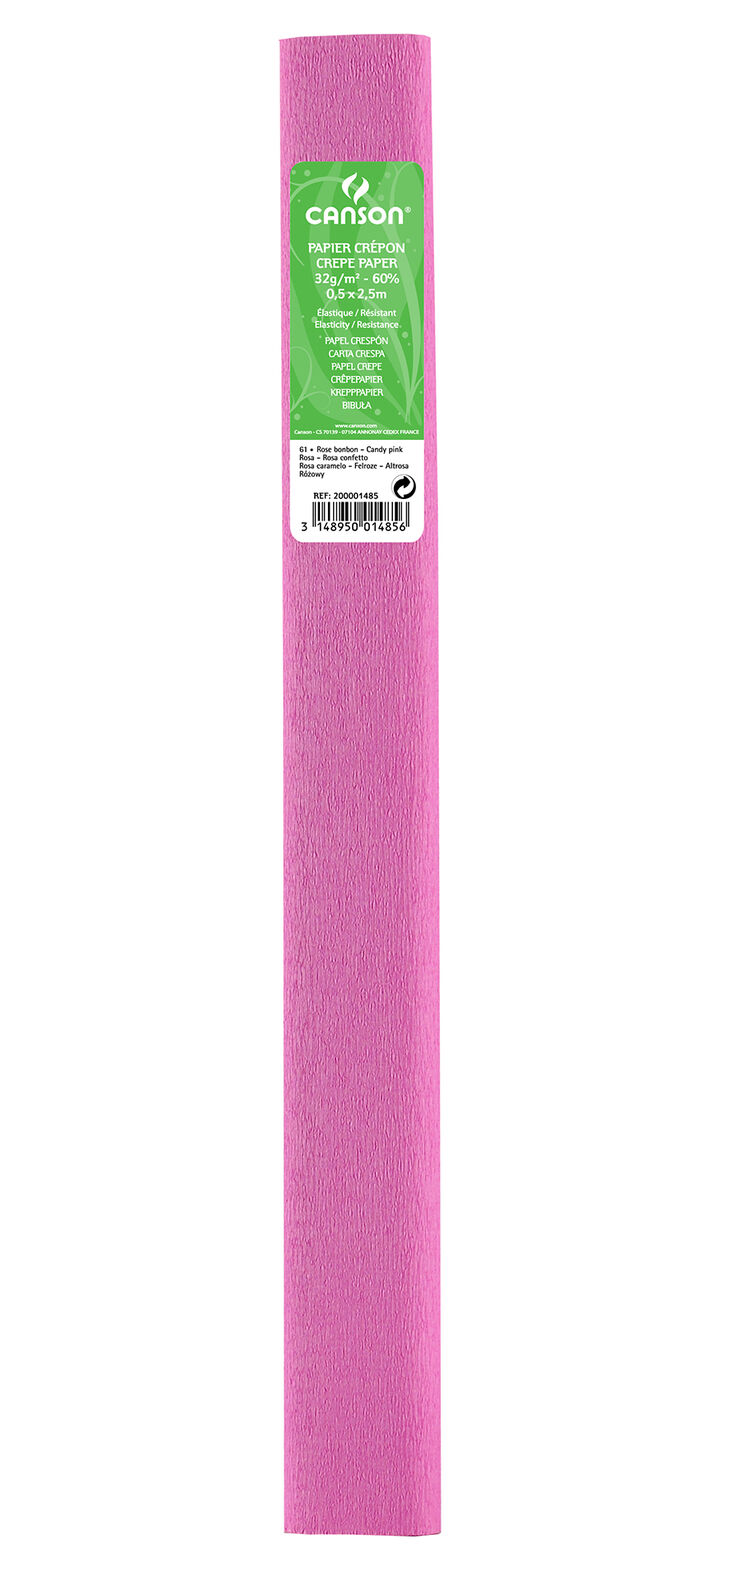 Rotlle Paper Crespó (Pinotxo) Canson 50x250cm rosa